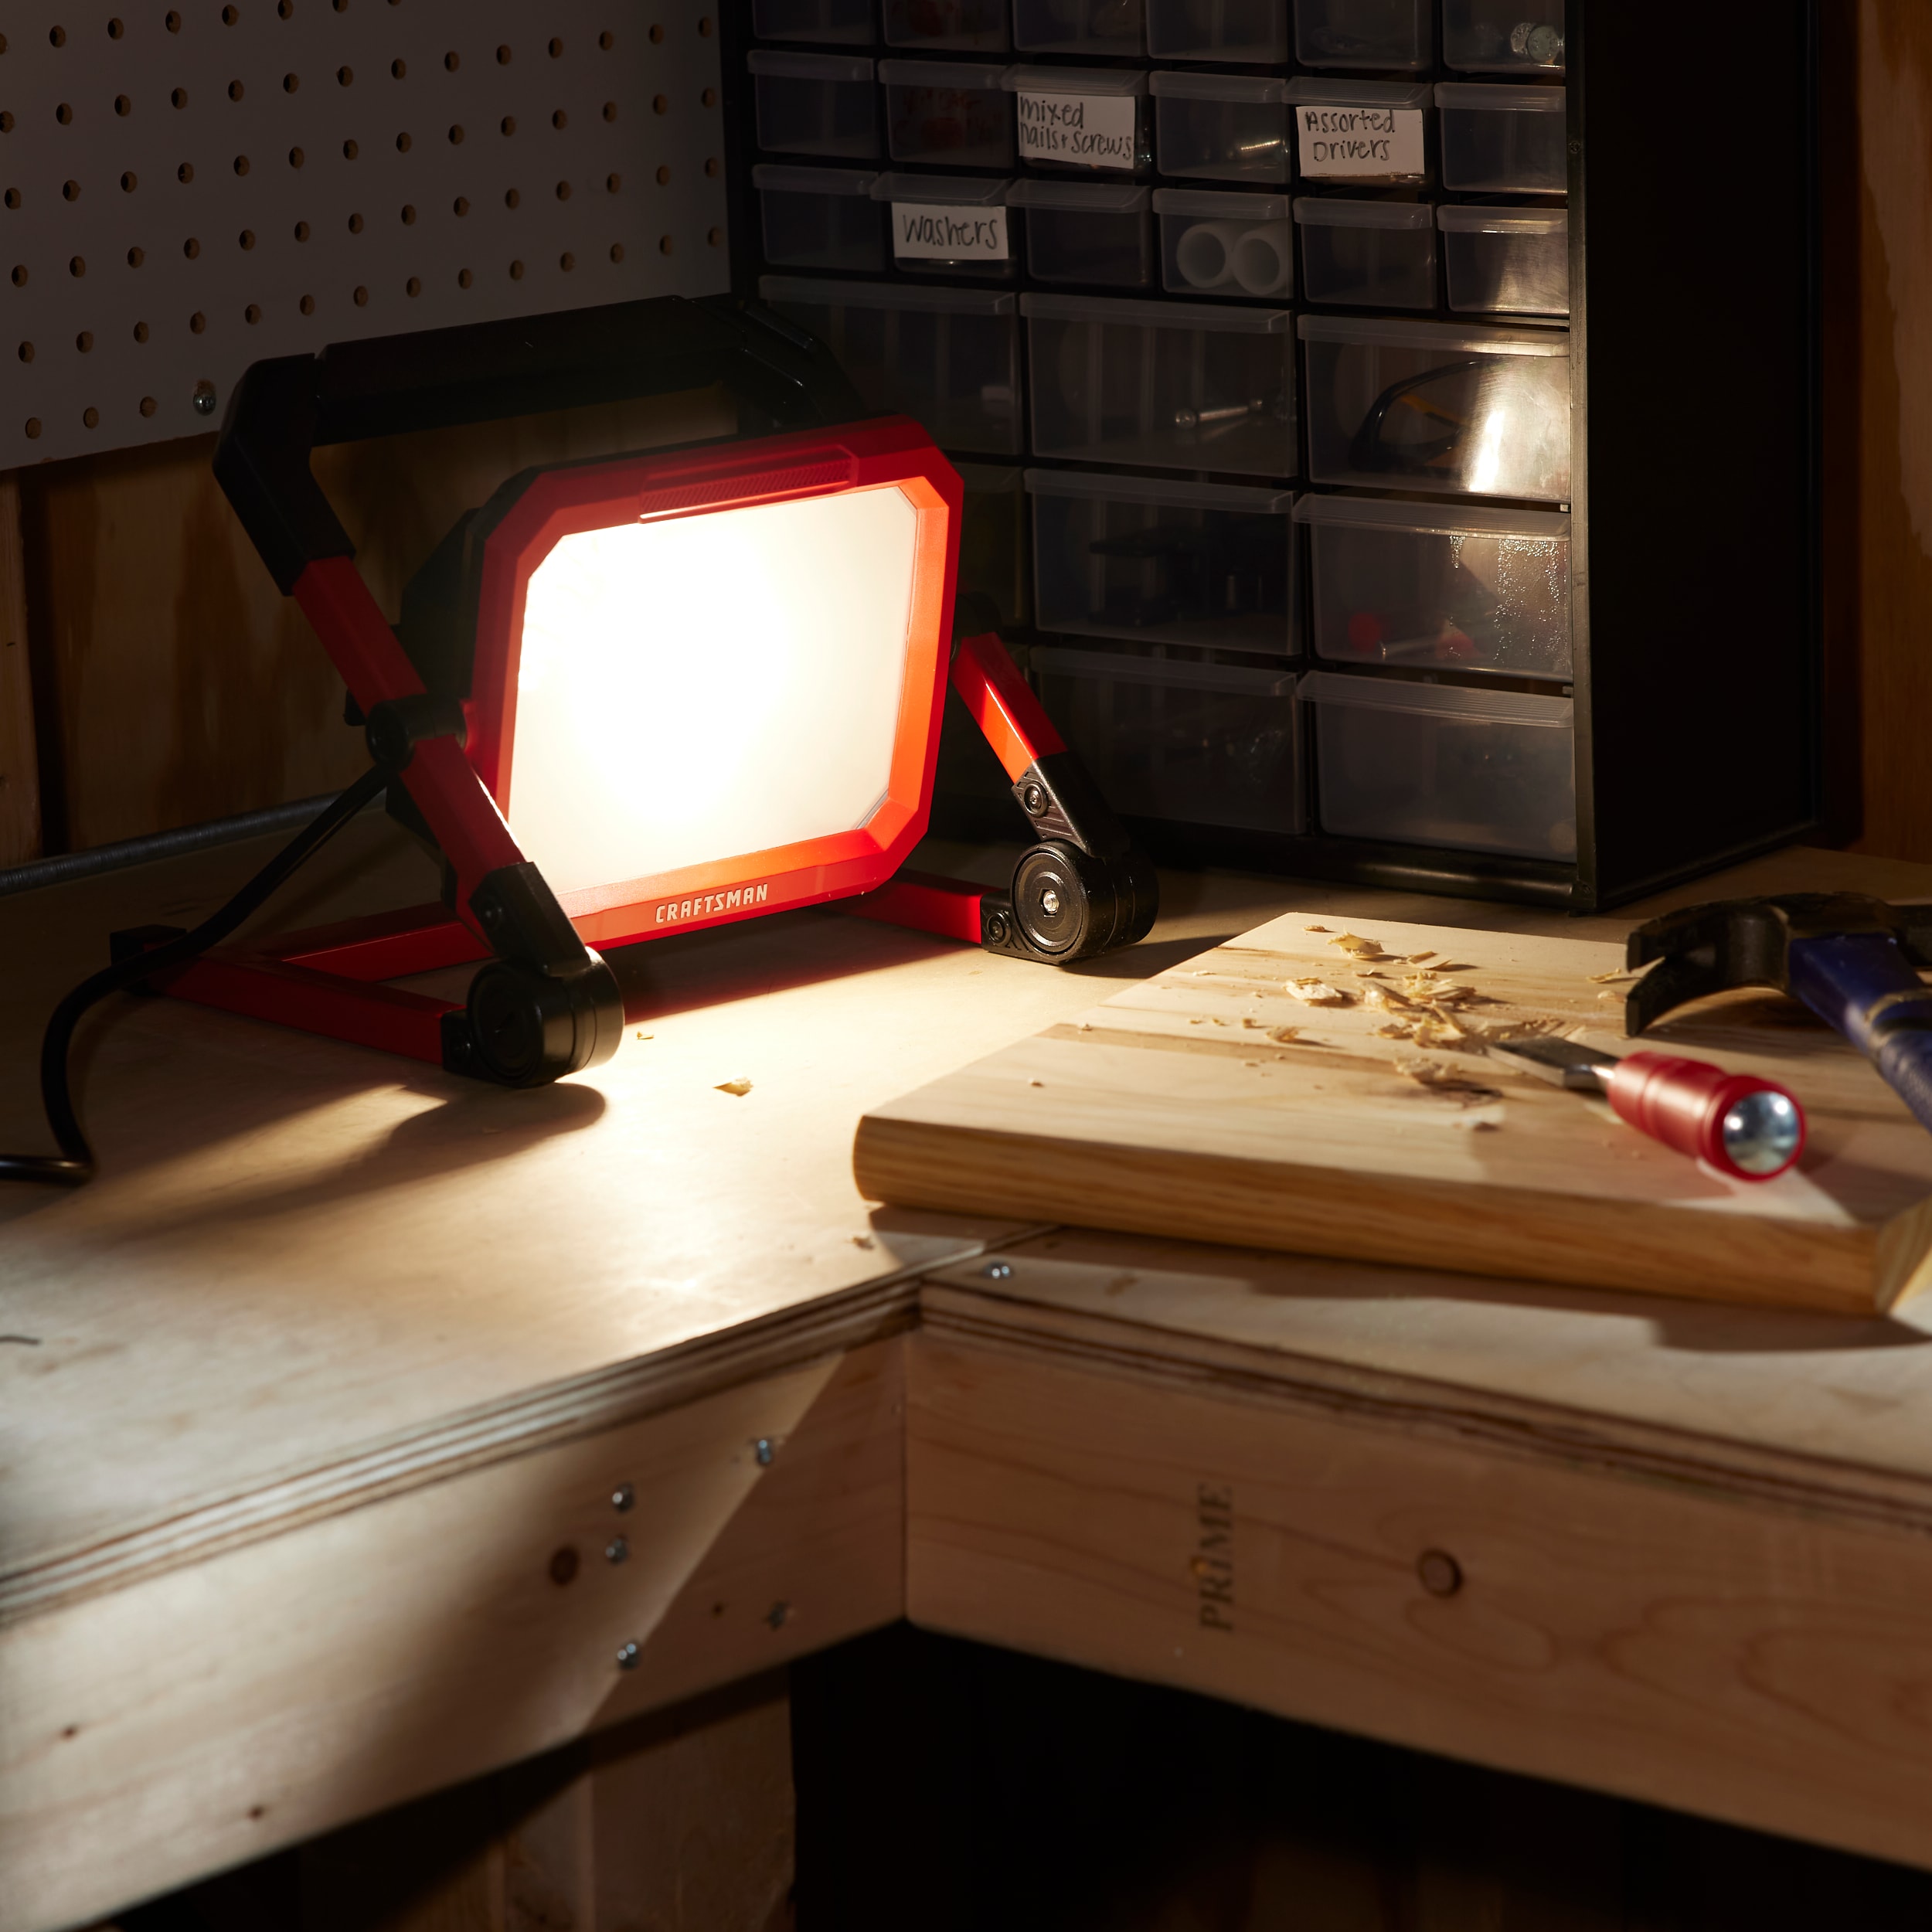 Craftsman Dual Head LED Light Portable Work Light — 1500 Lumens, 20 Watts,  Model# 34-17361